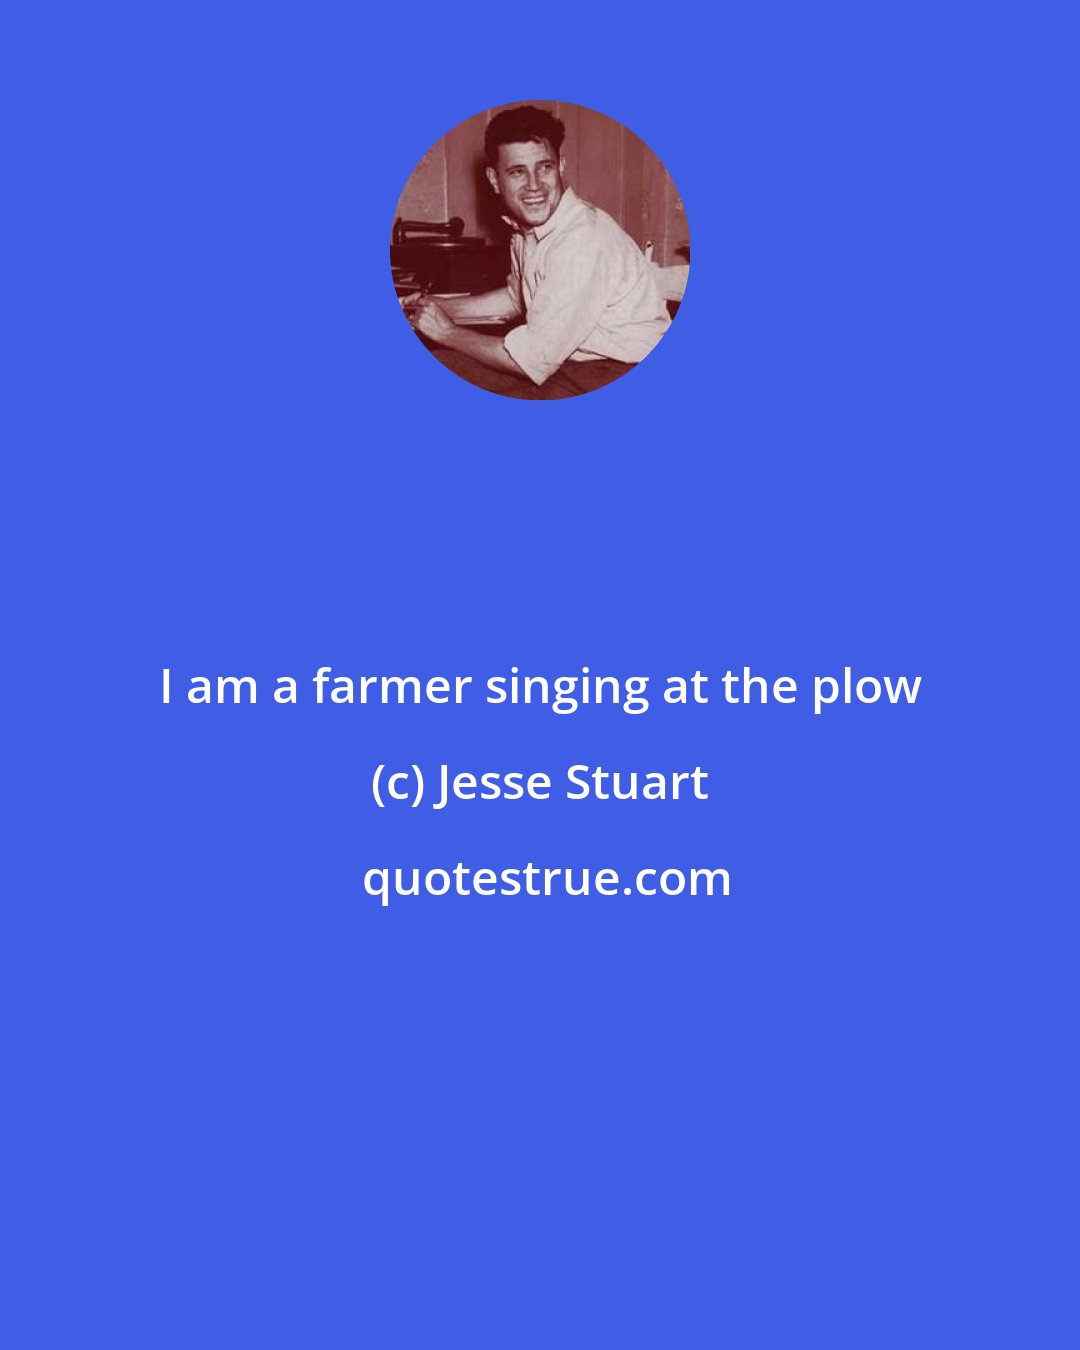 Jesse Stuart: I am a farmer singing at the plow